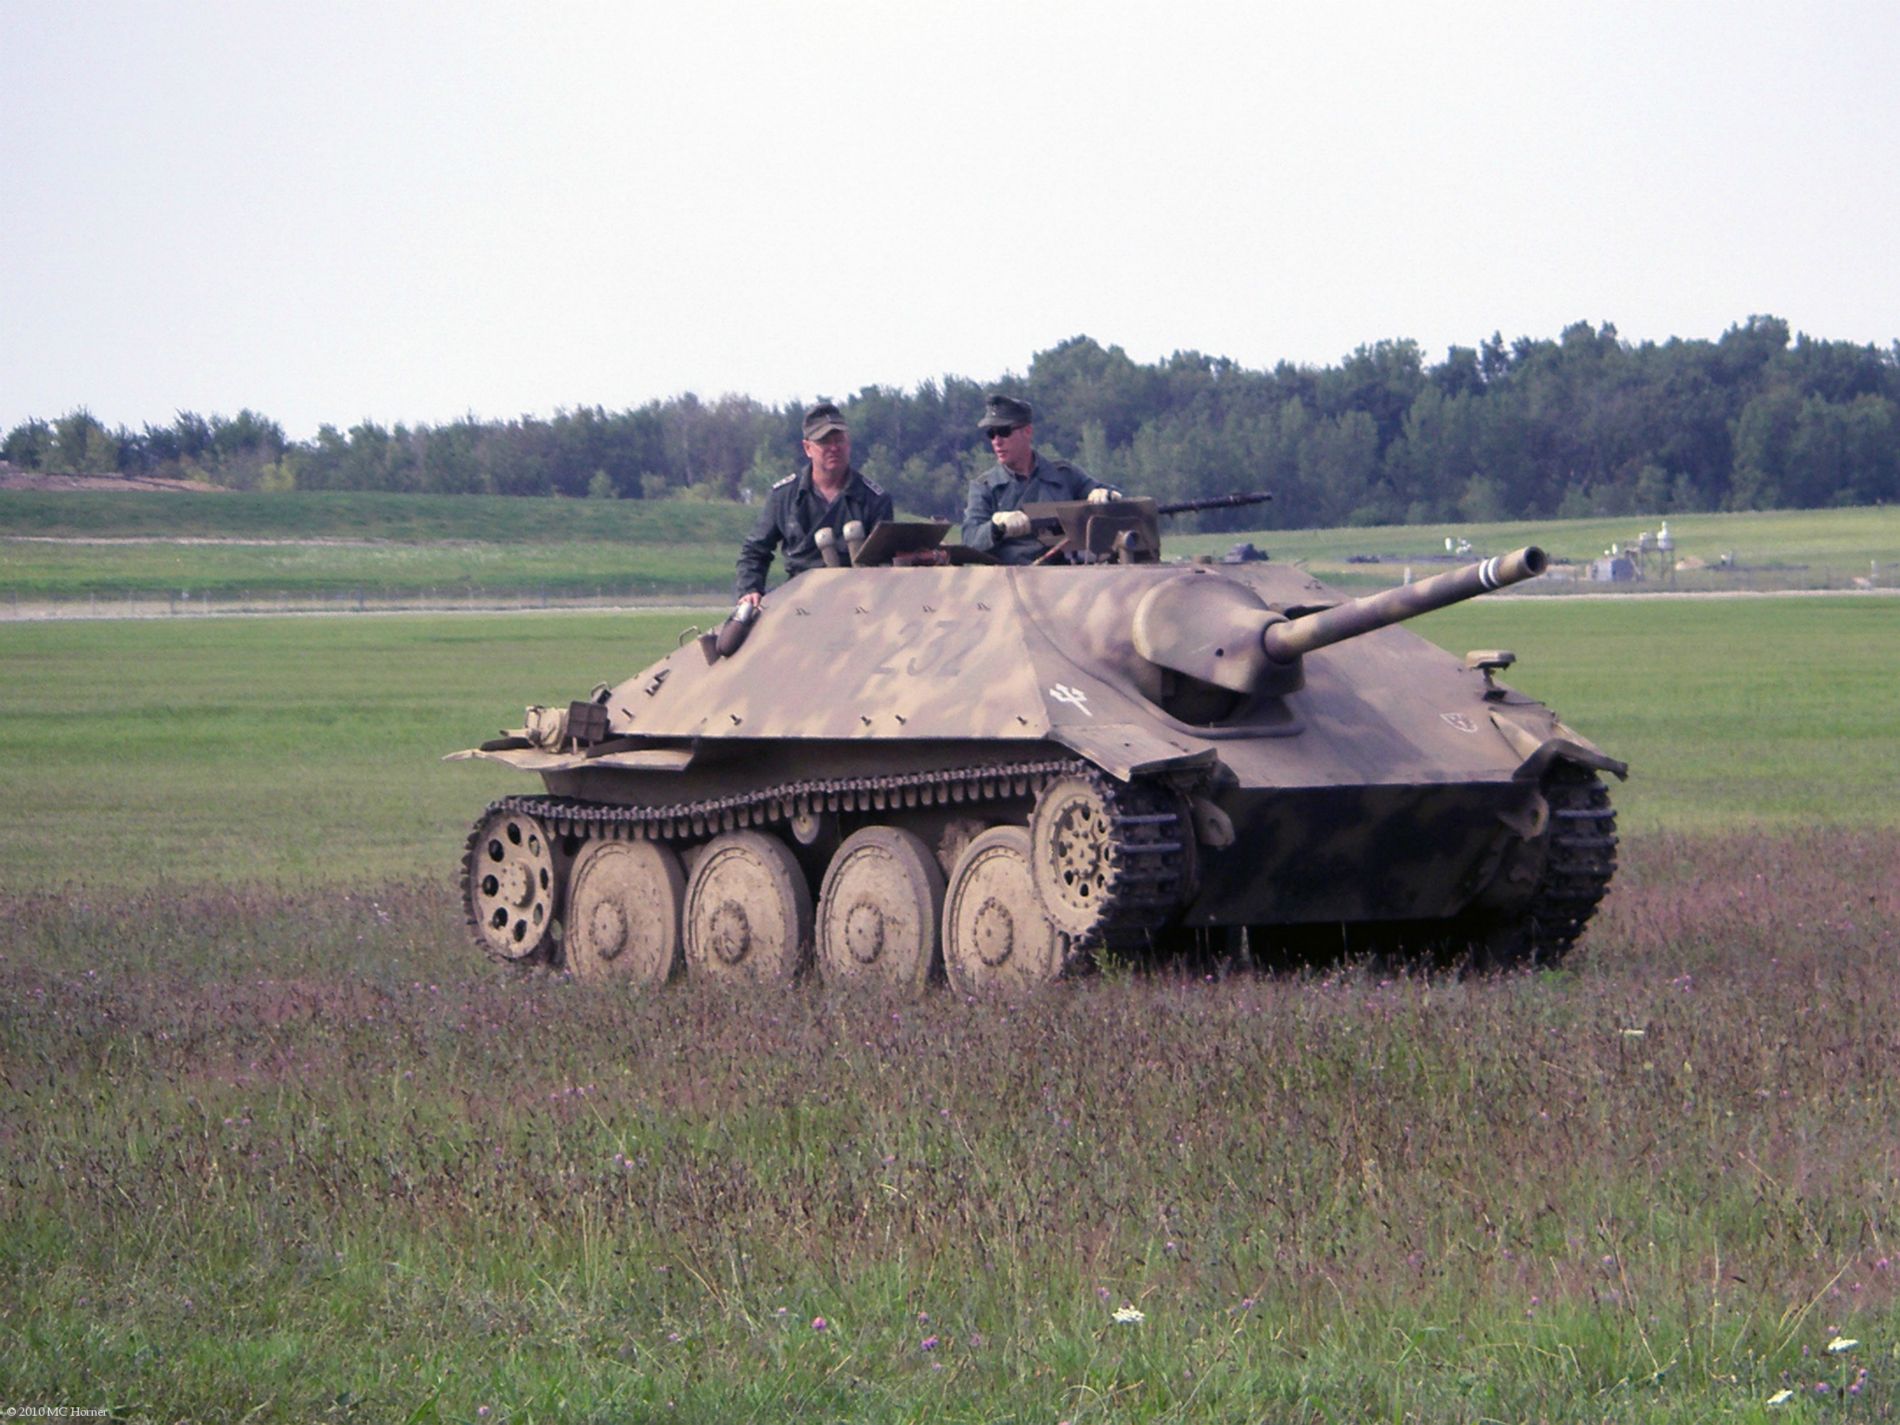 Tank Destroyer, in color.